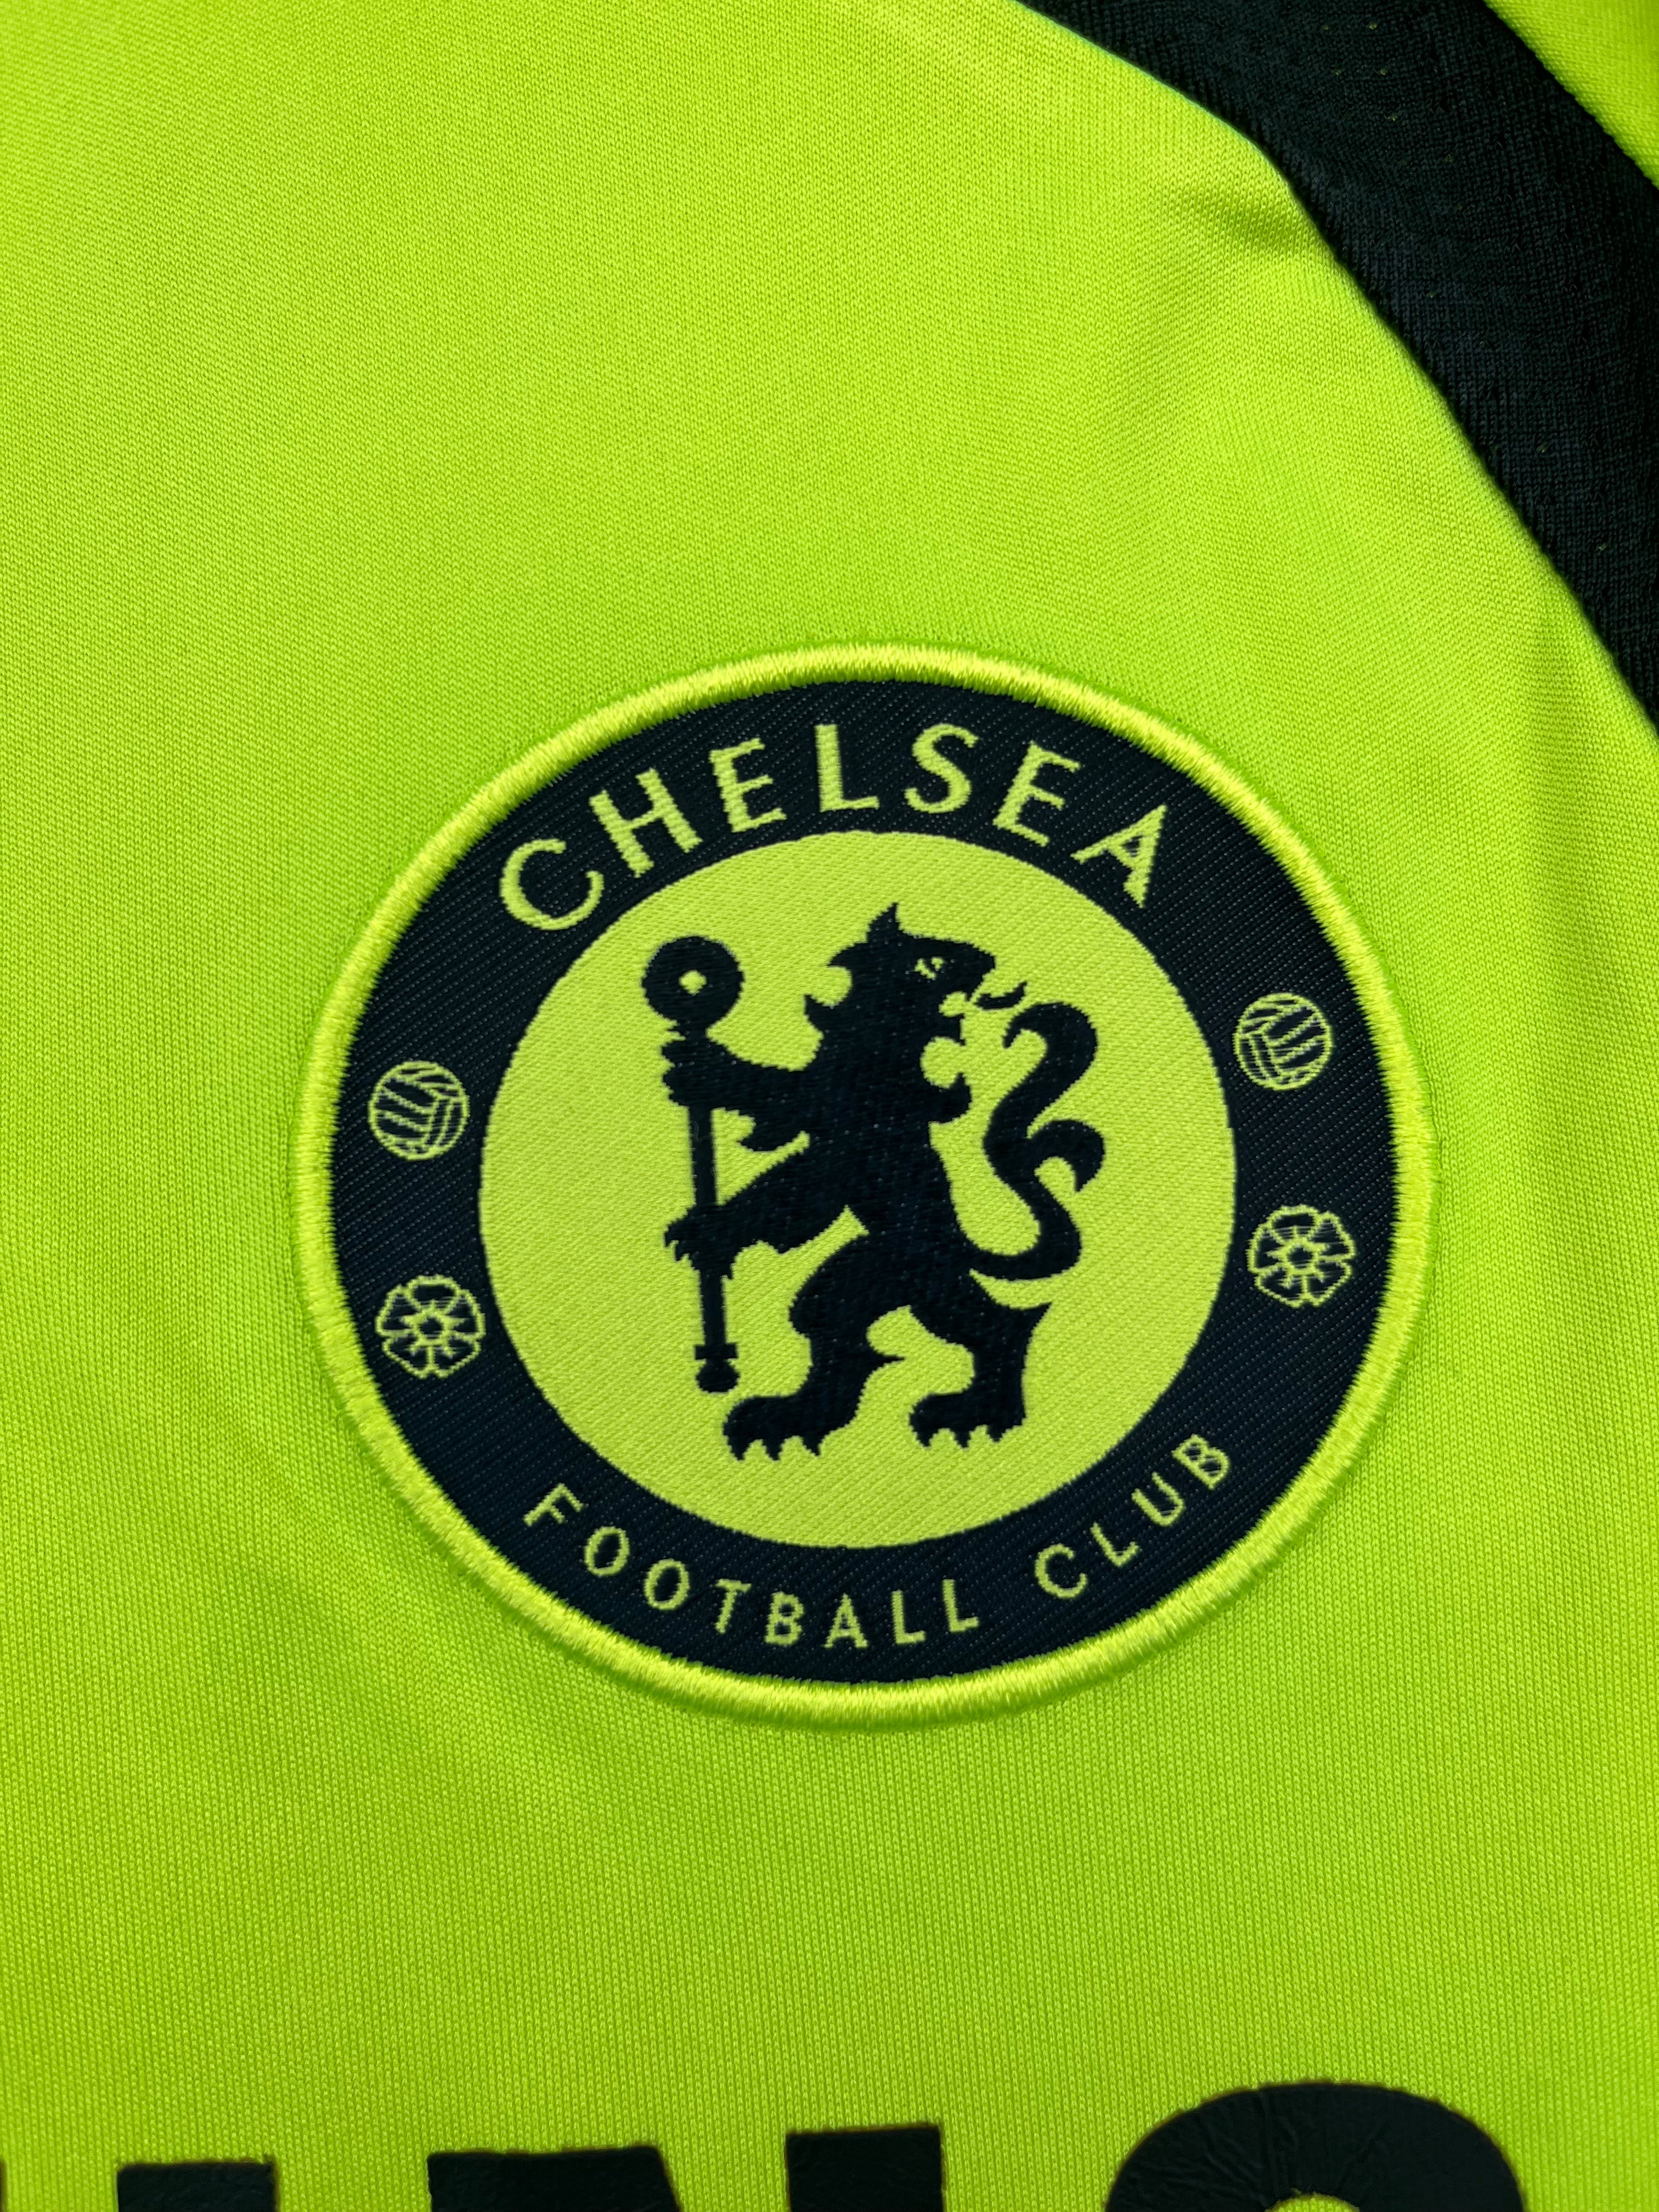 2007/08 Chelsea Away Shirt (S) 7.5/10